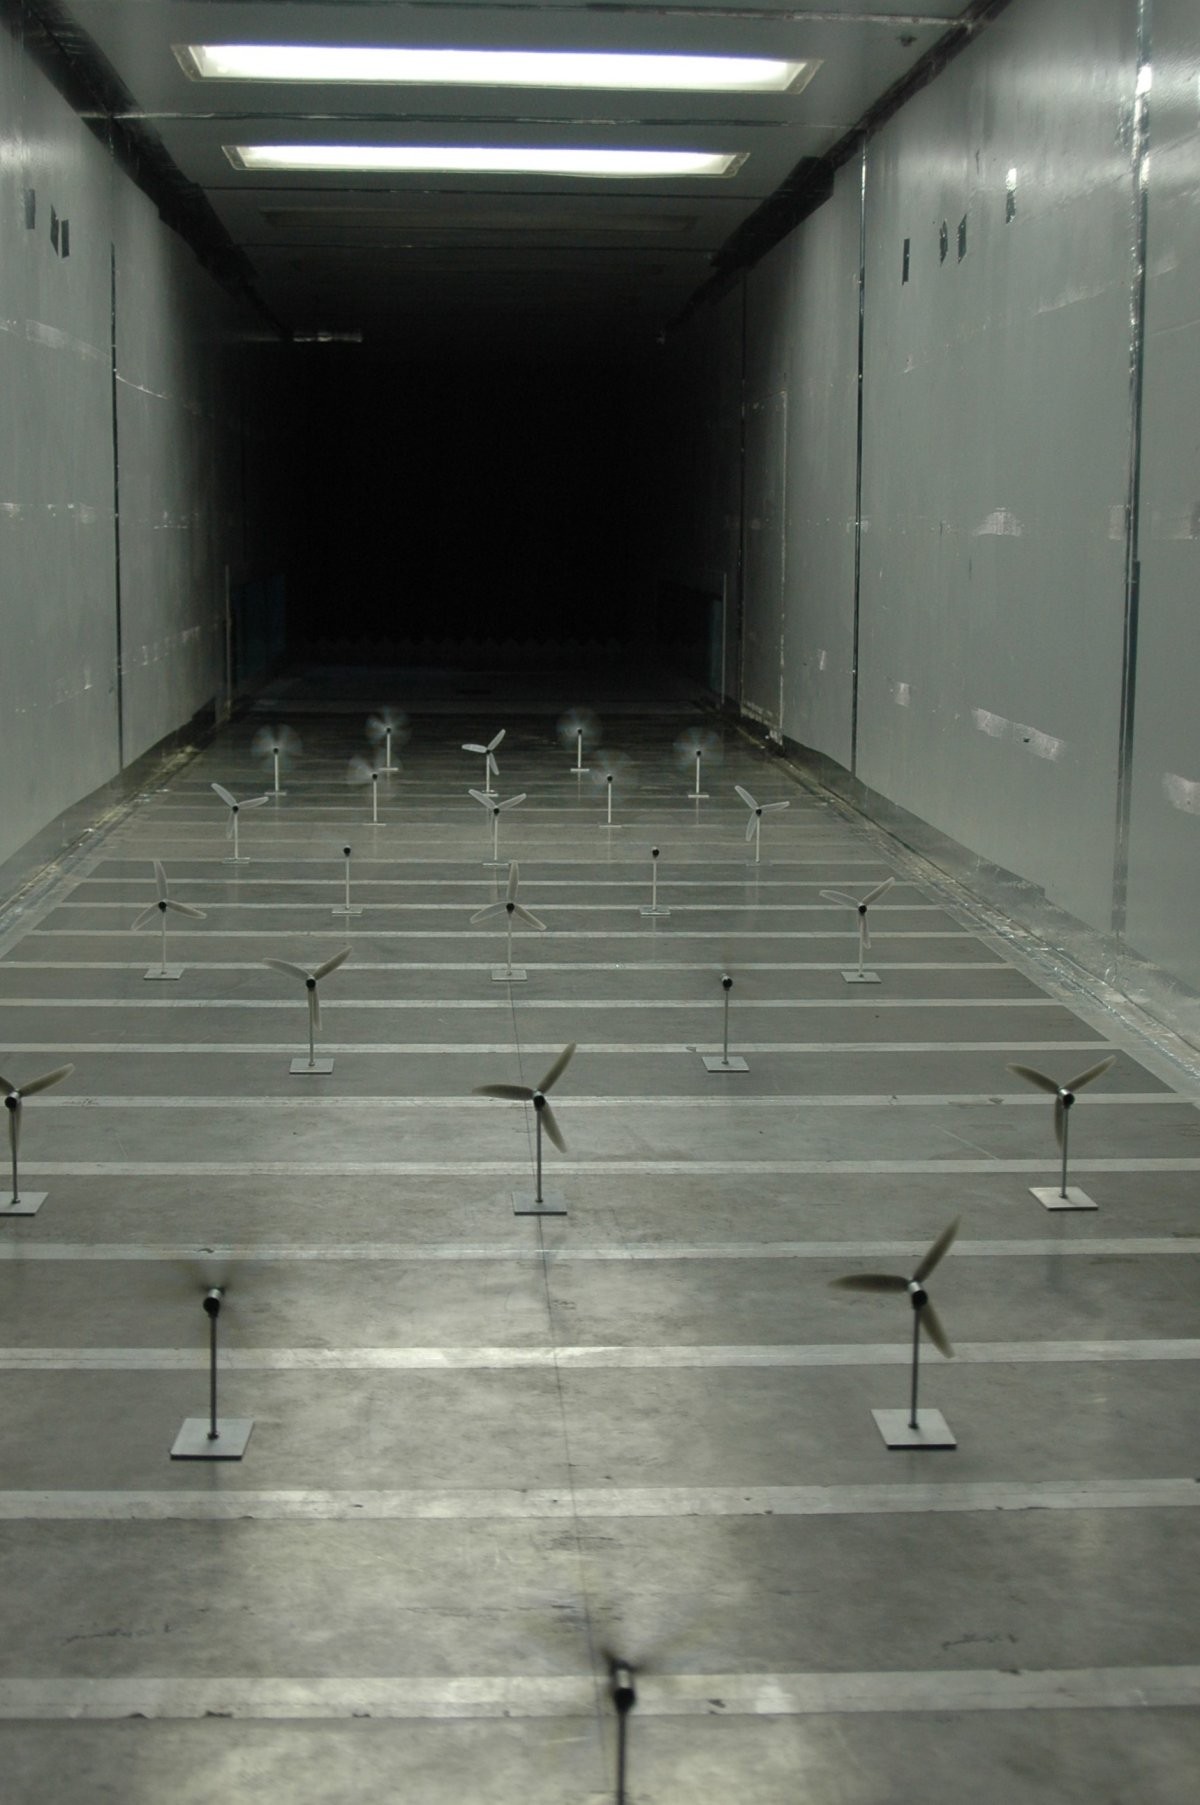 Small turbine models in the SAFL wind tunnel